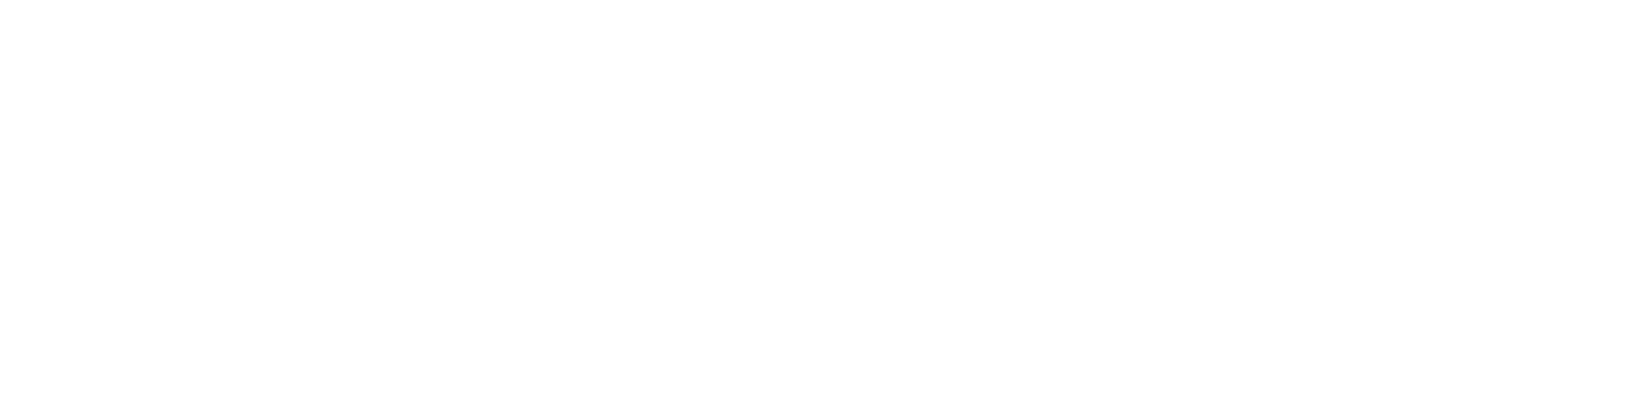 Ermenegildo Zegna logo large for dark backgrounds (transparent PNG)